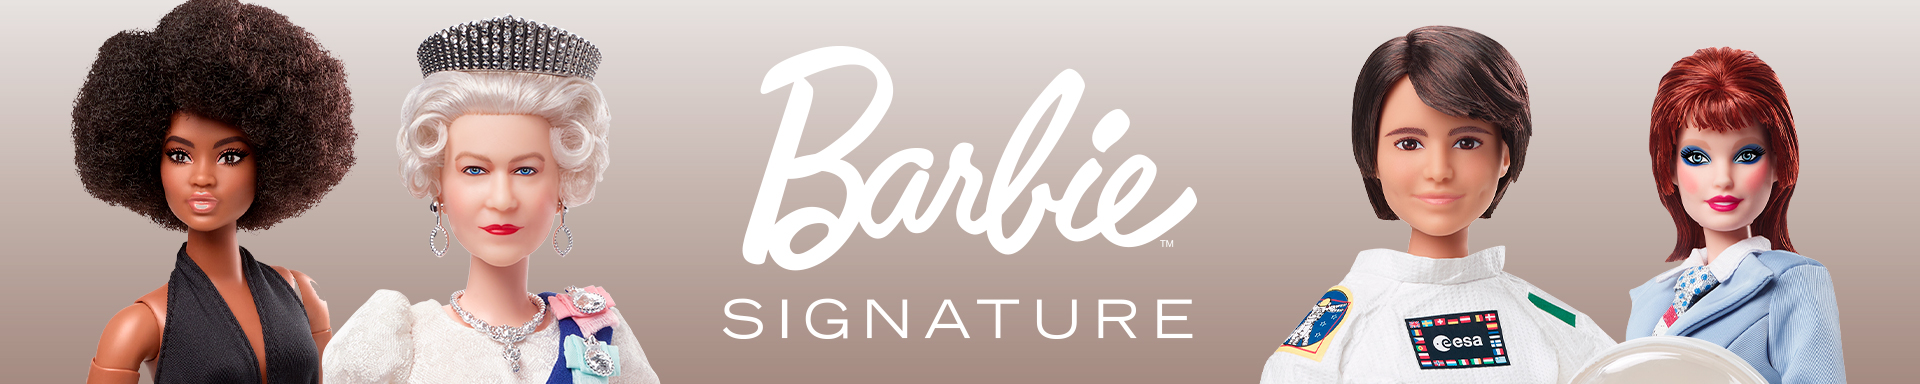 Barbie Signature da collezione